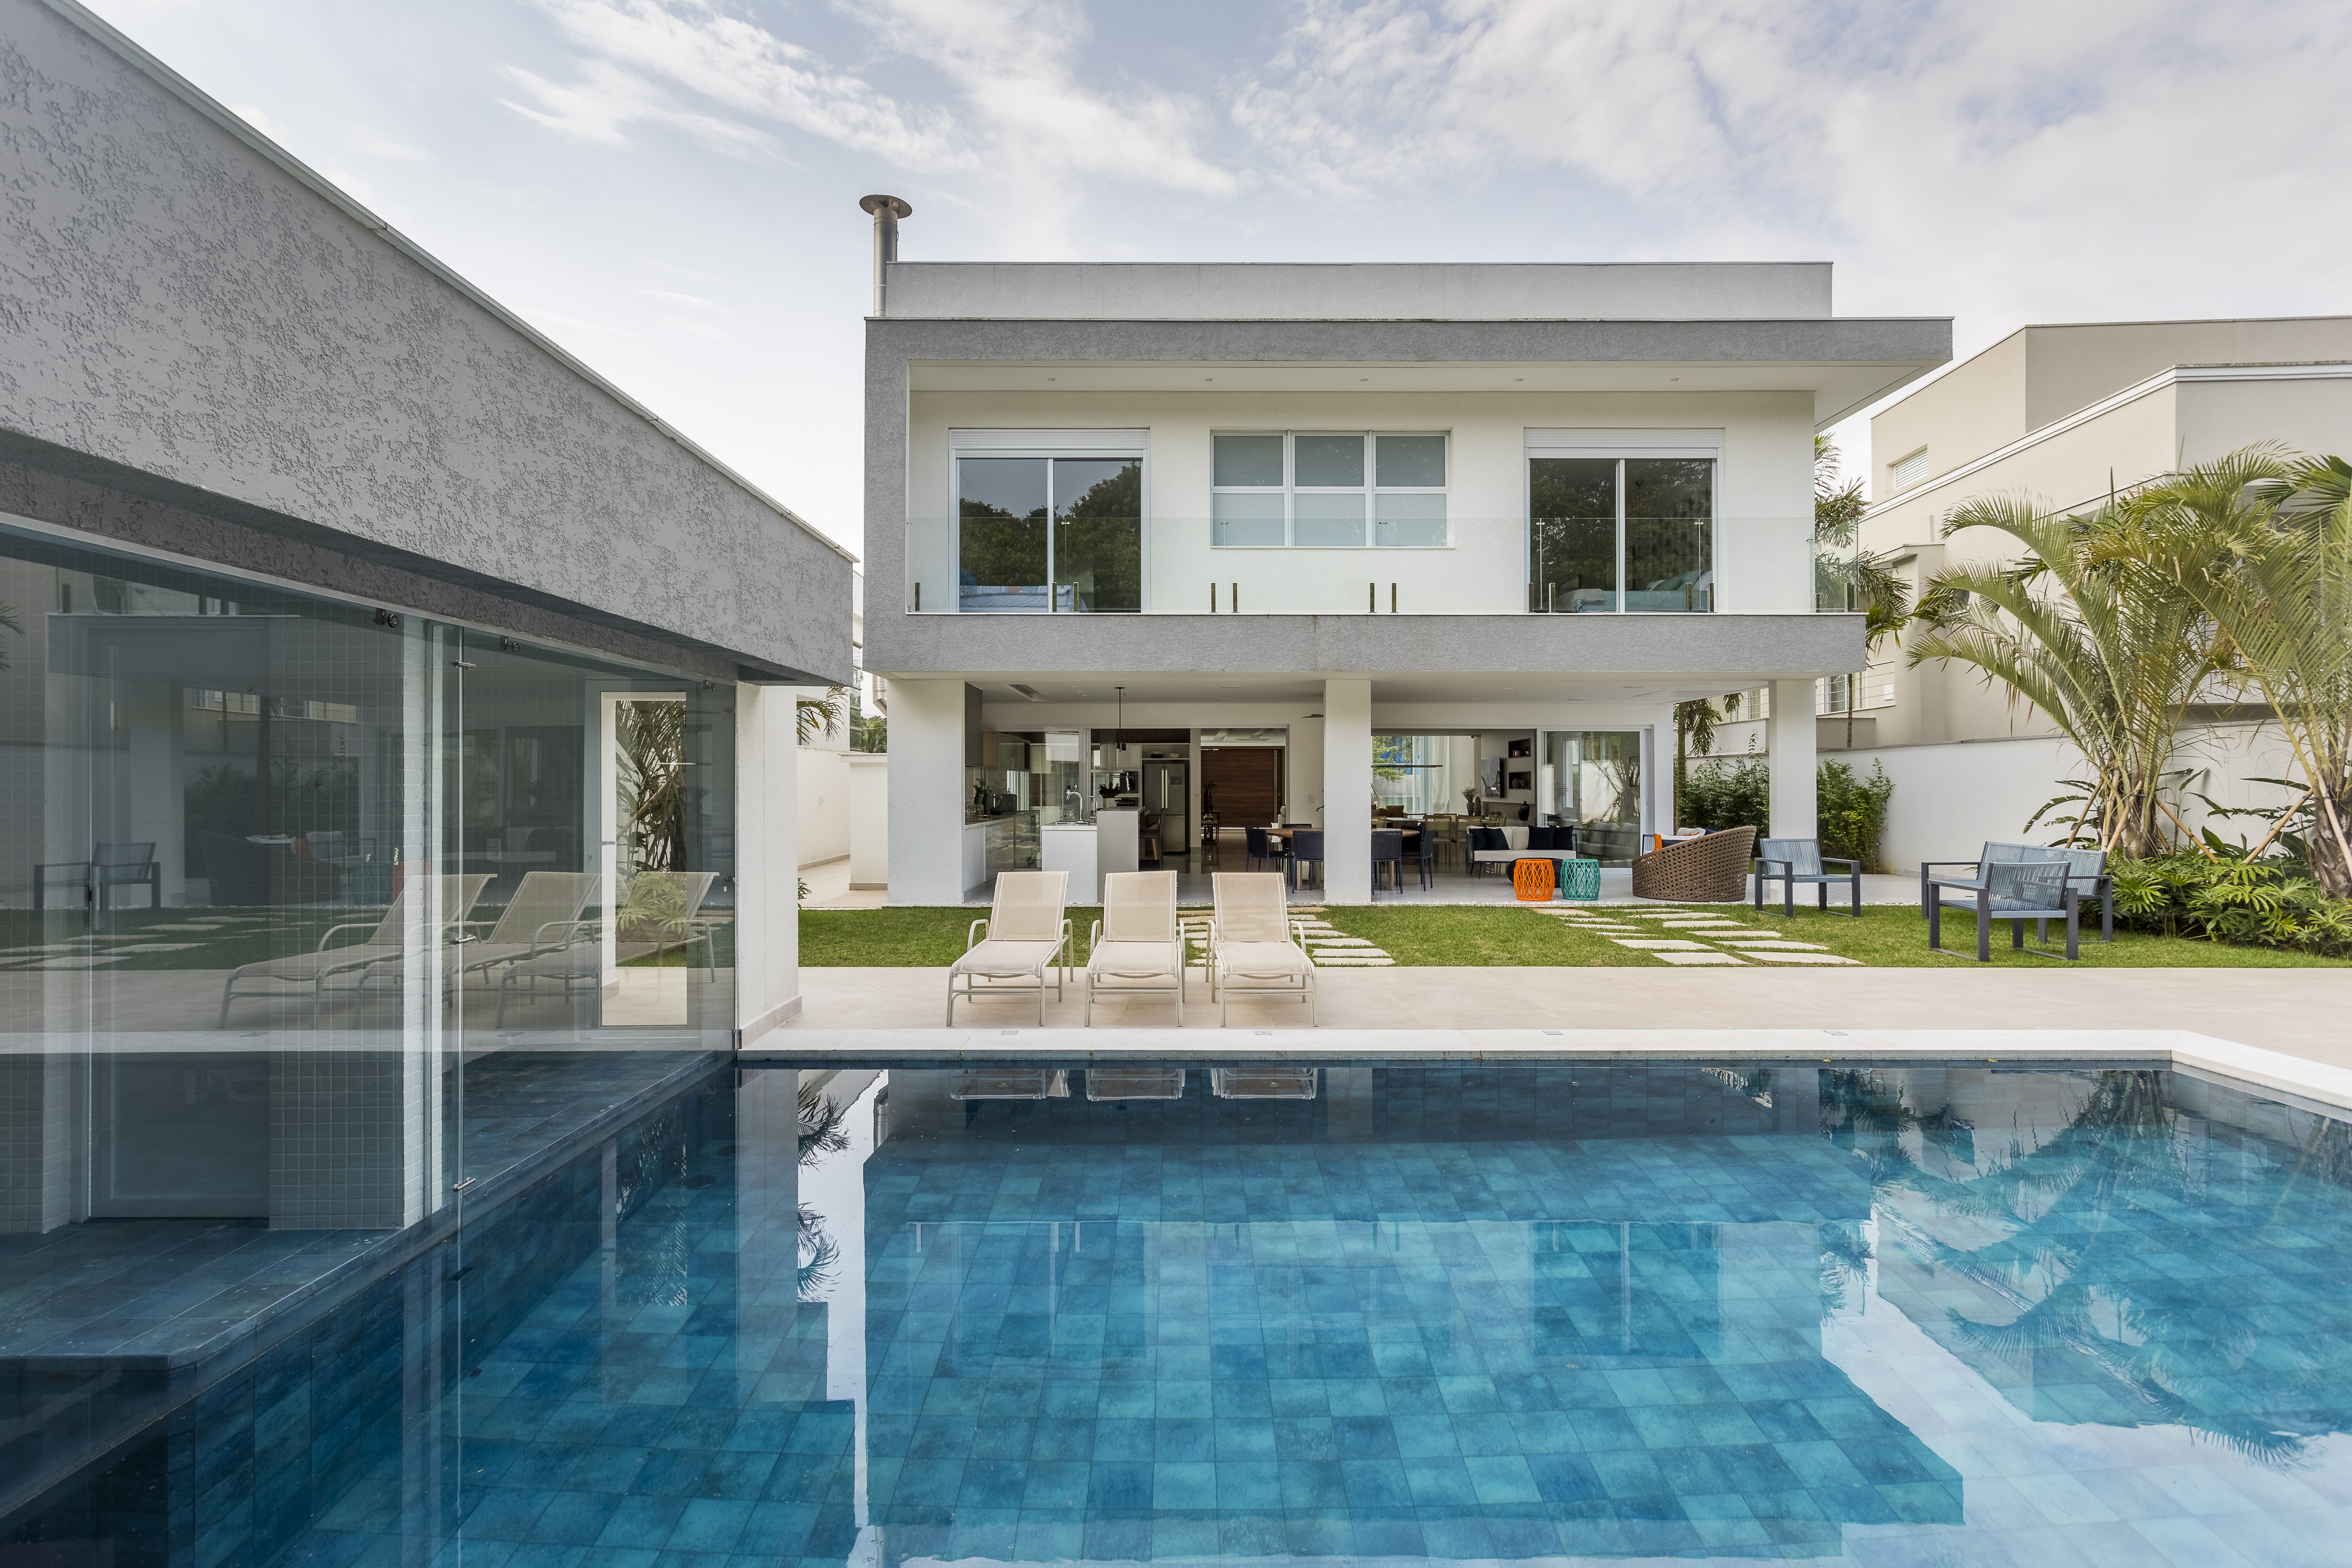 Ampla, clean e contemporânea: confira o projeto desta casa de 800 m²